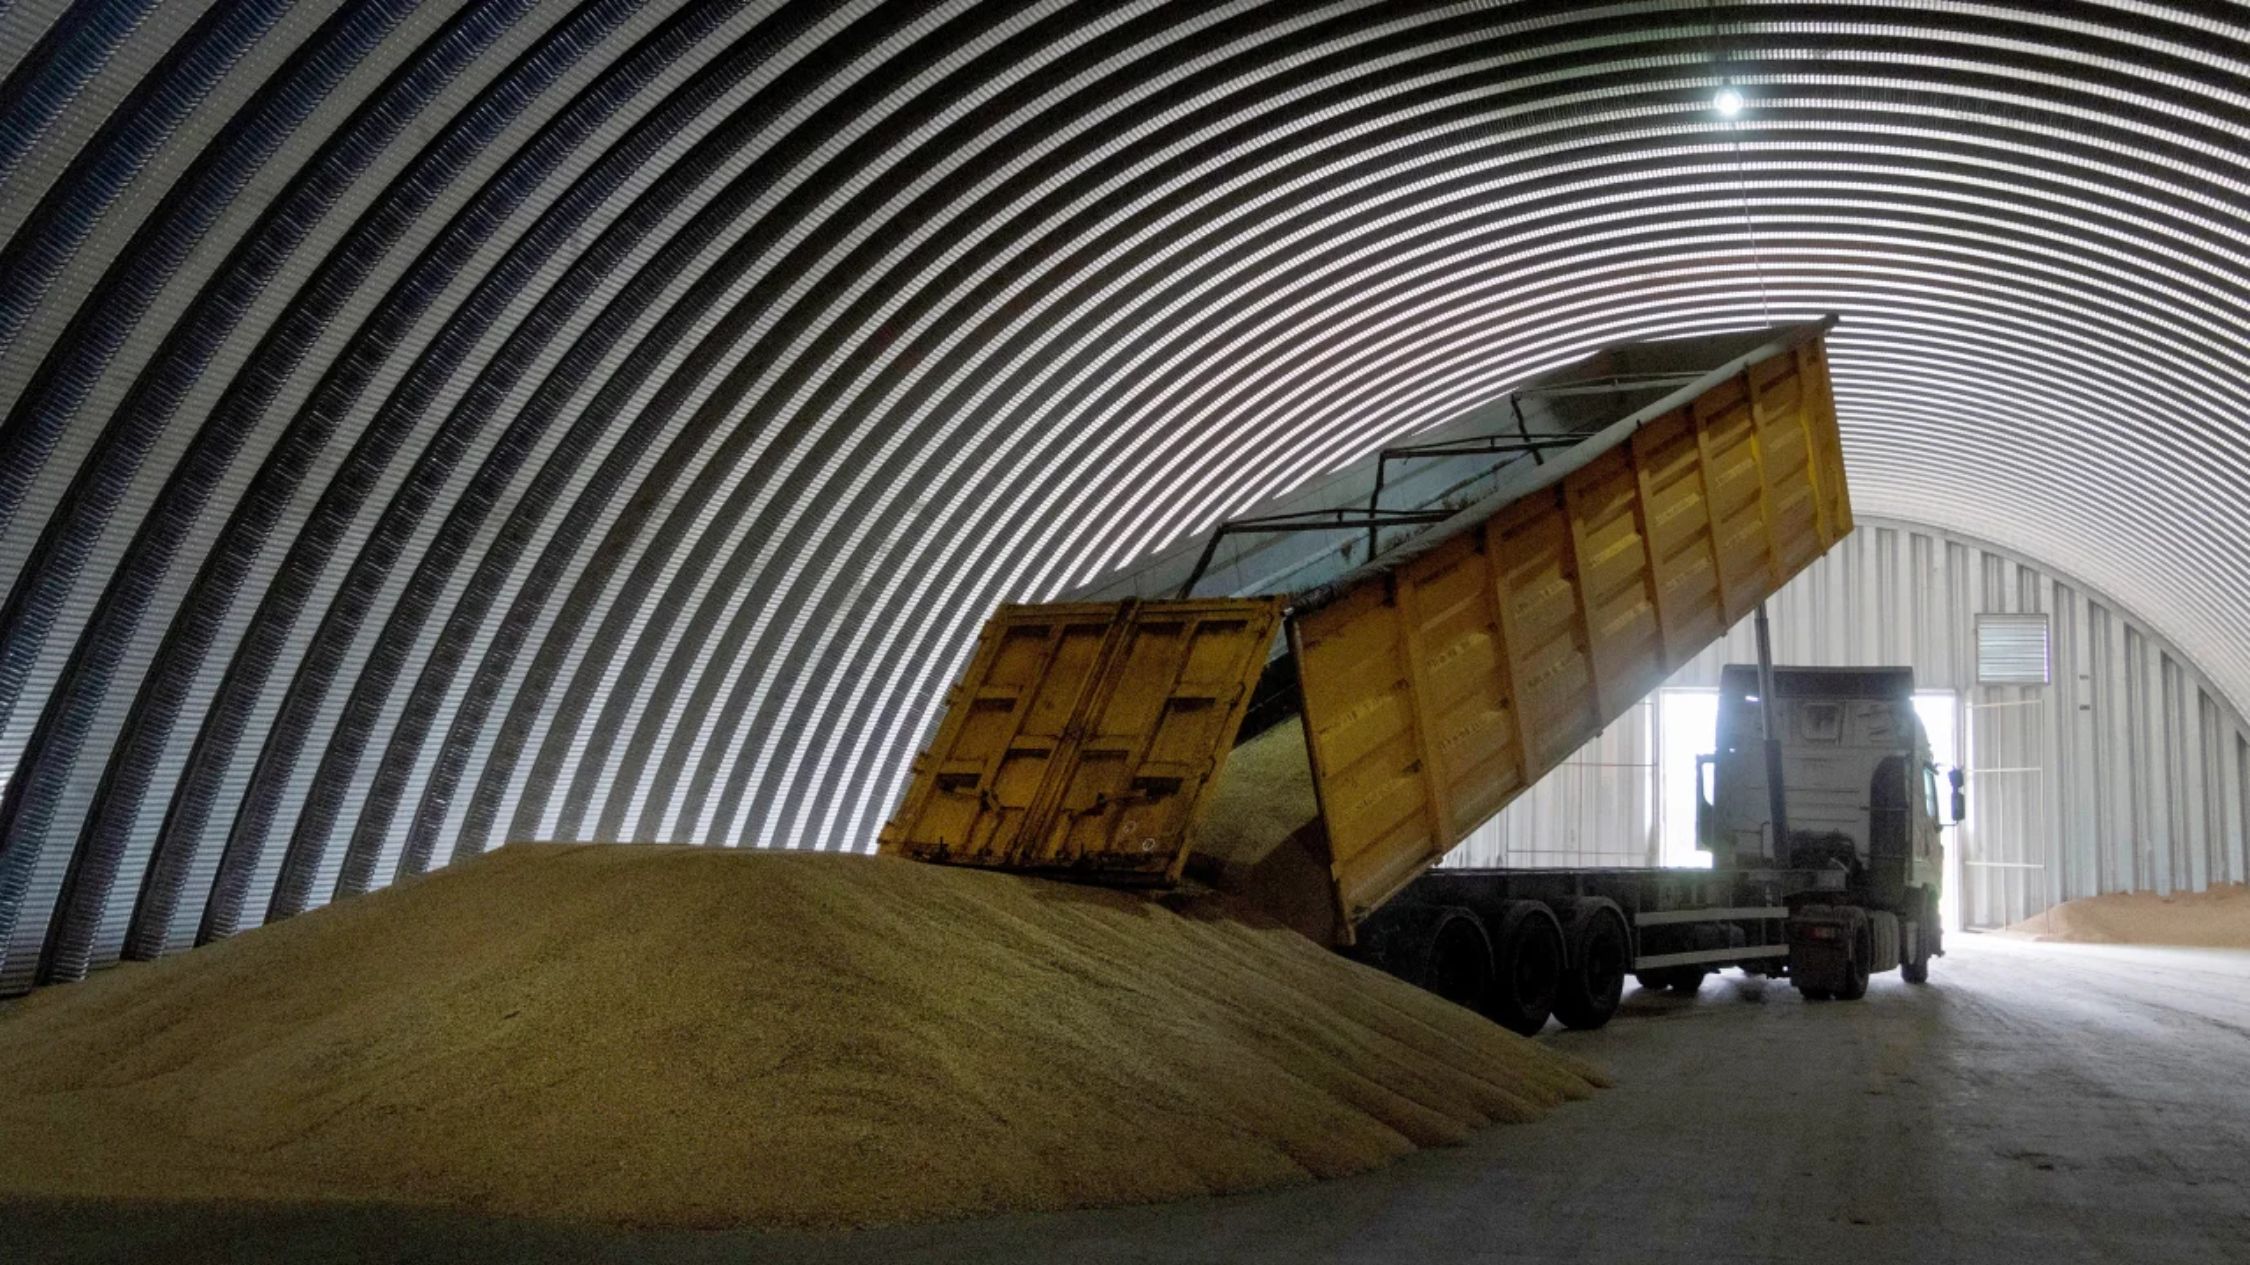 Ukraine hopes the EU will lift grain import restrictions